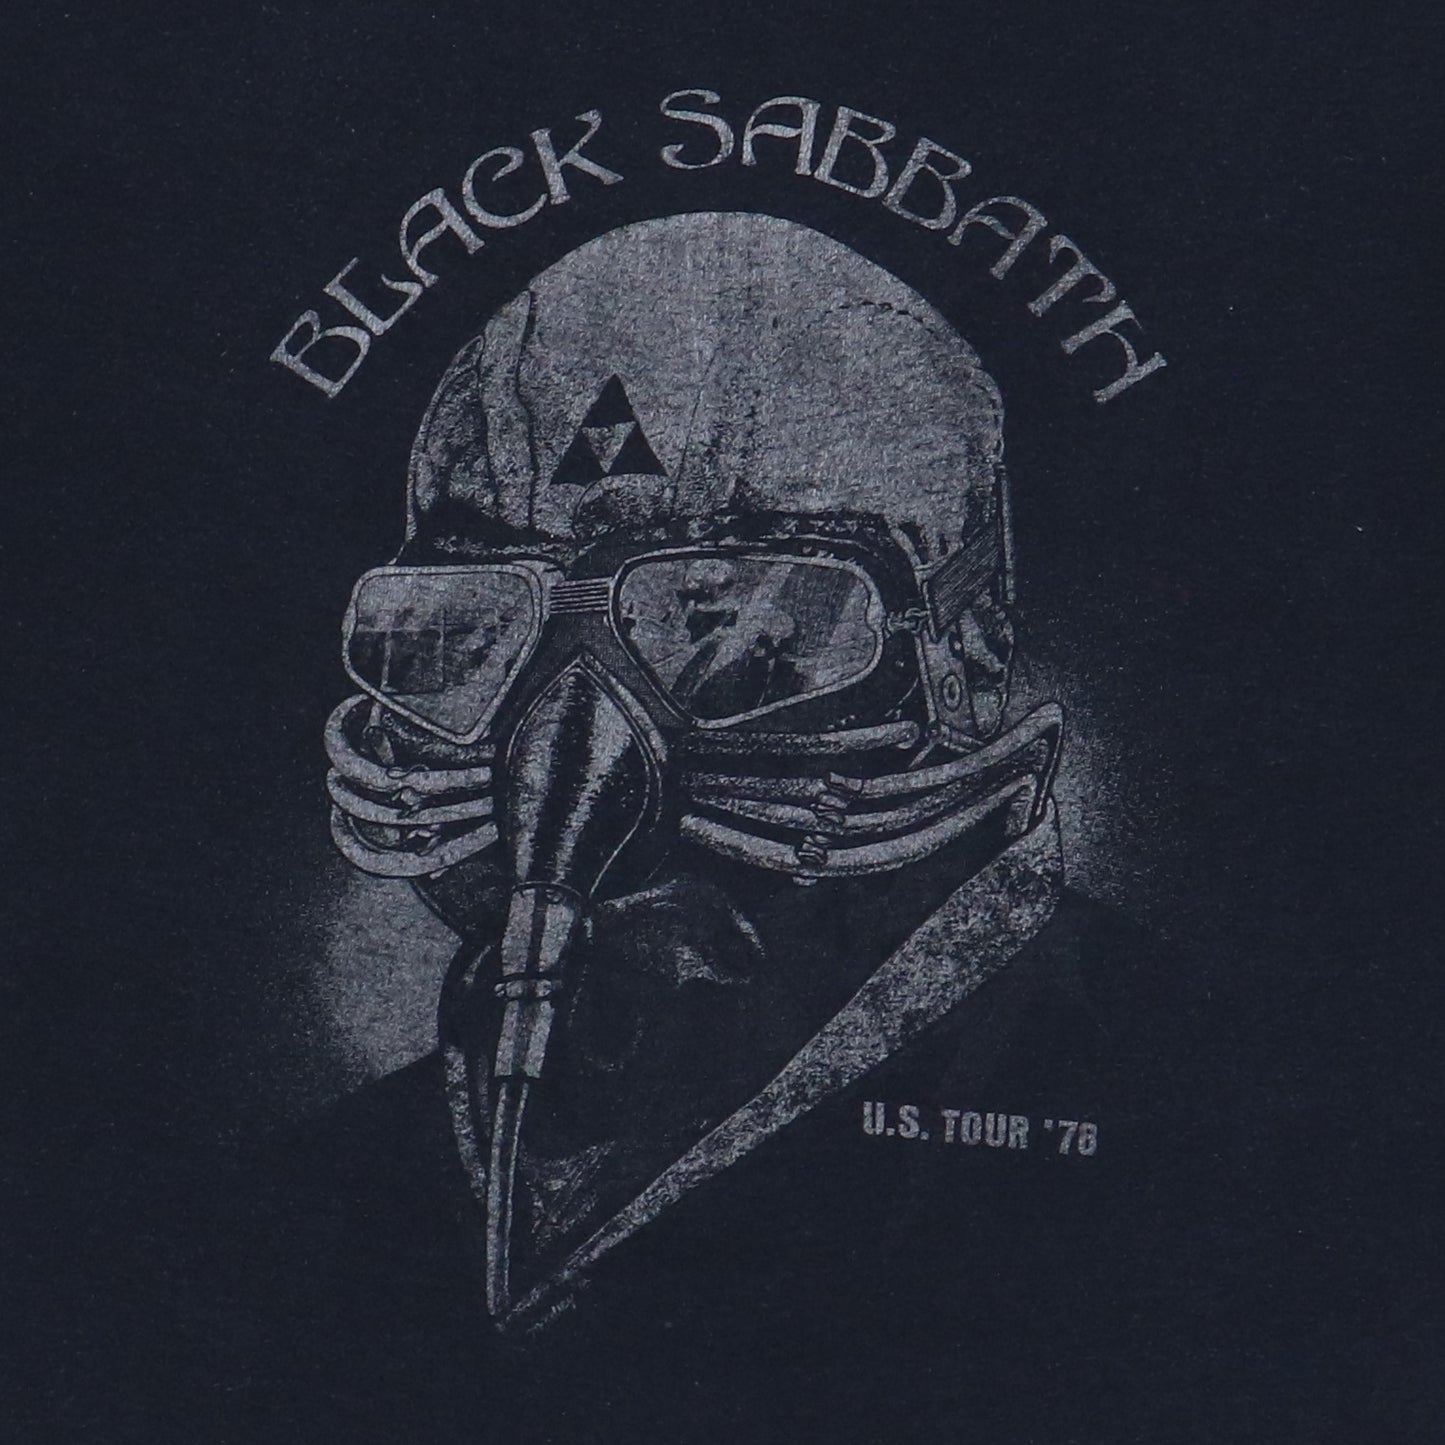 1976 Black Sabbath US Tour Shirt